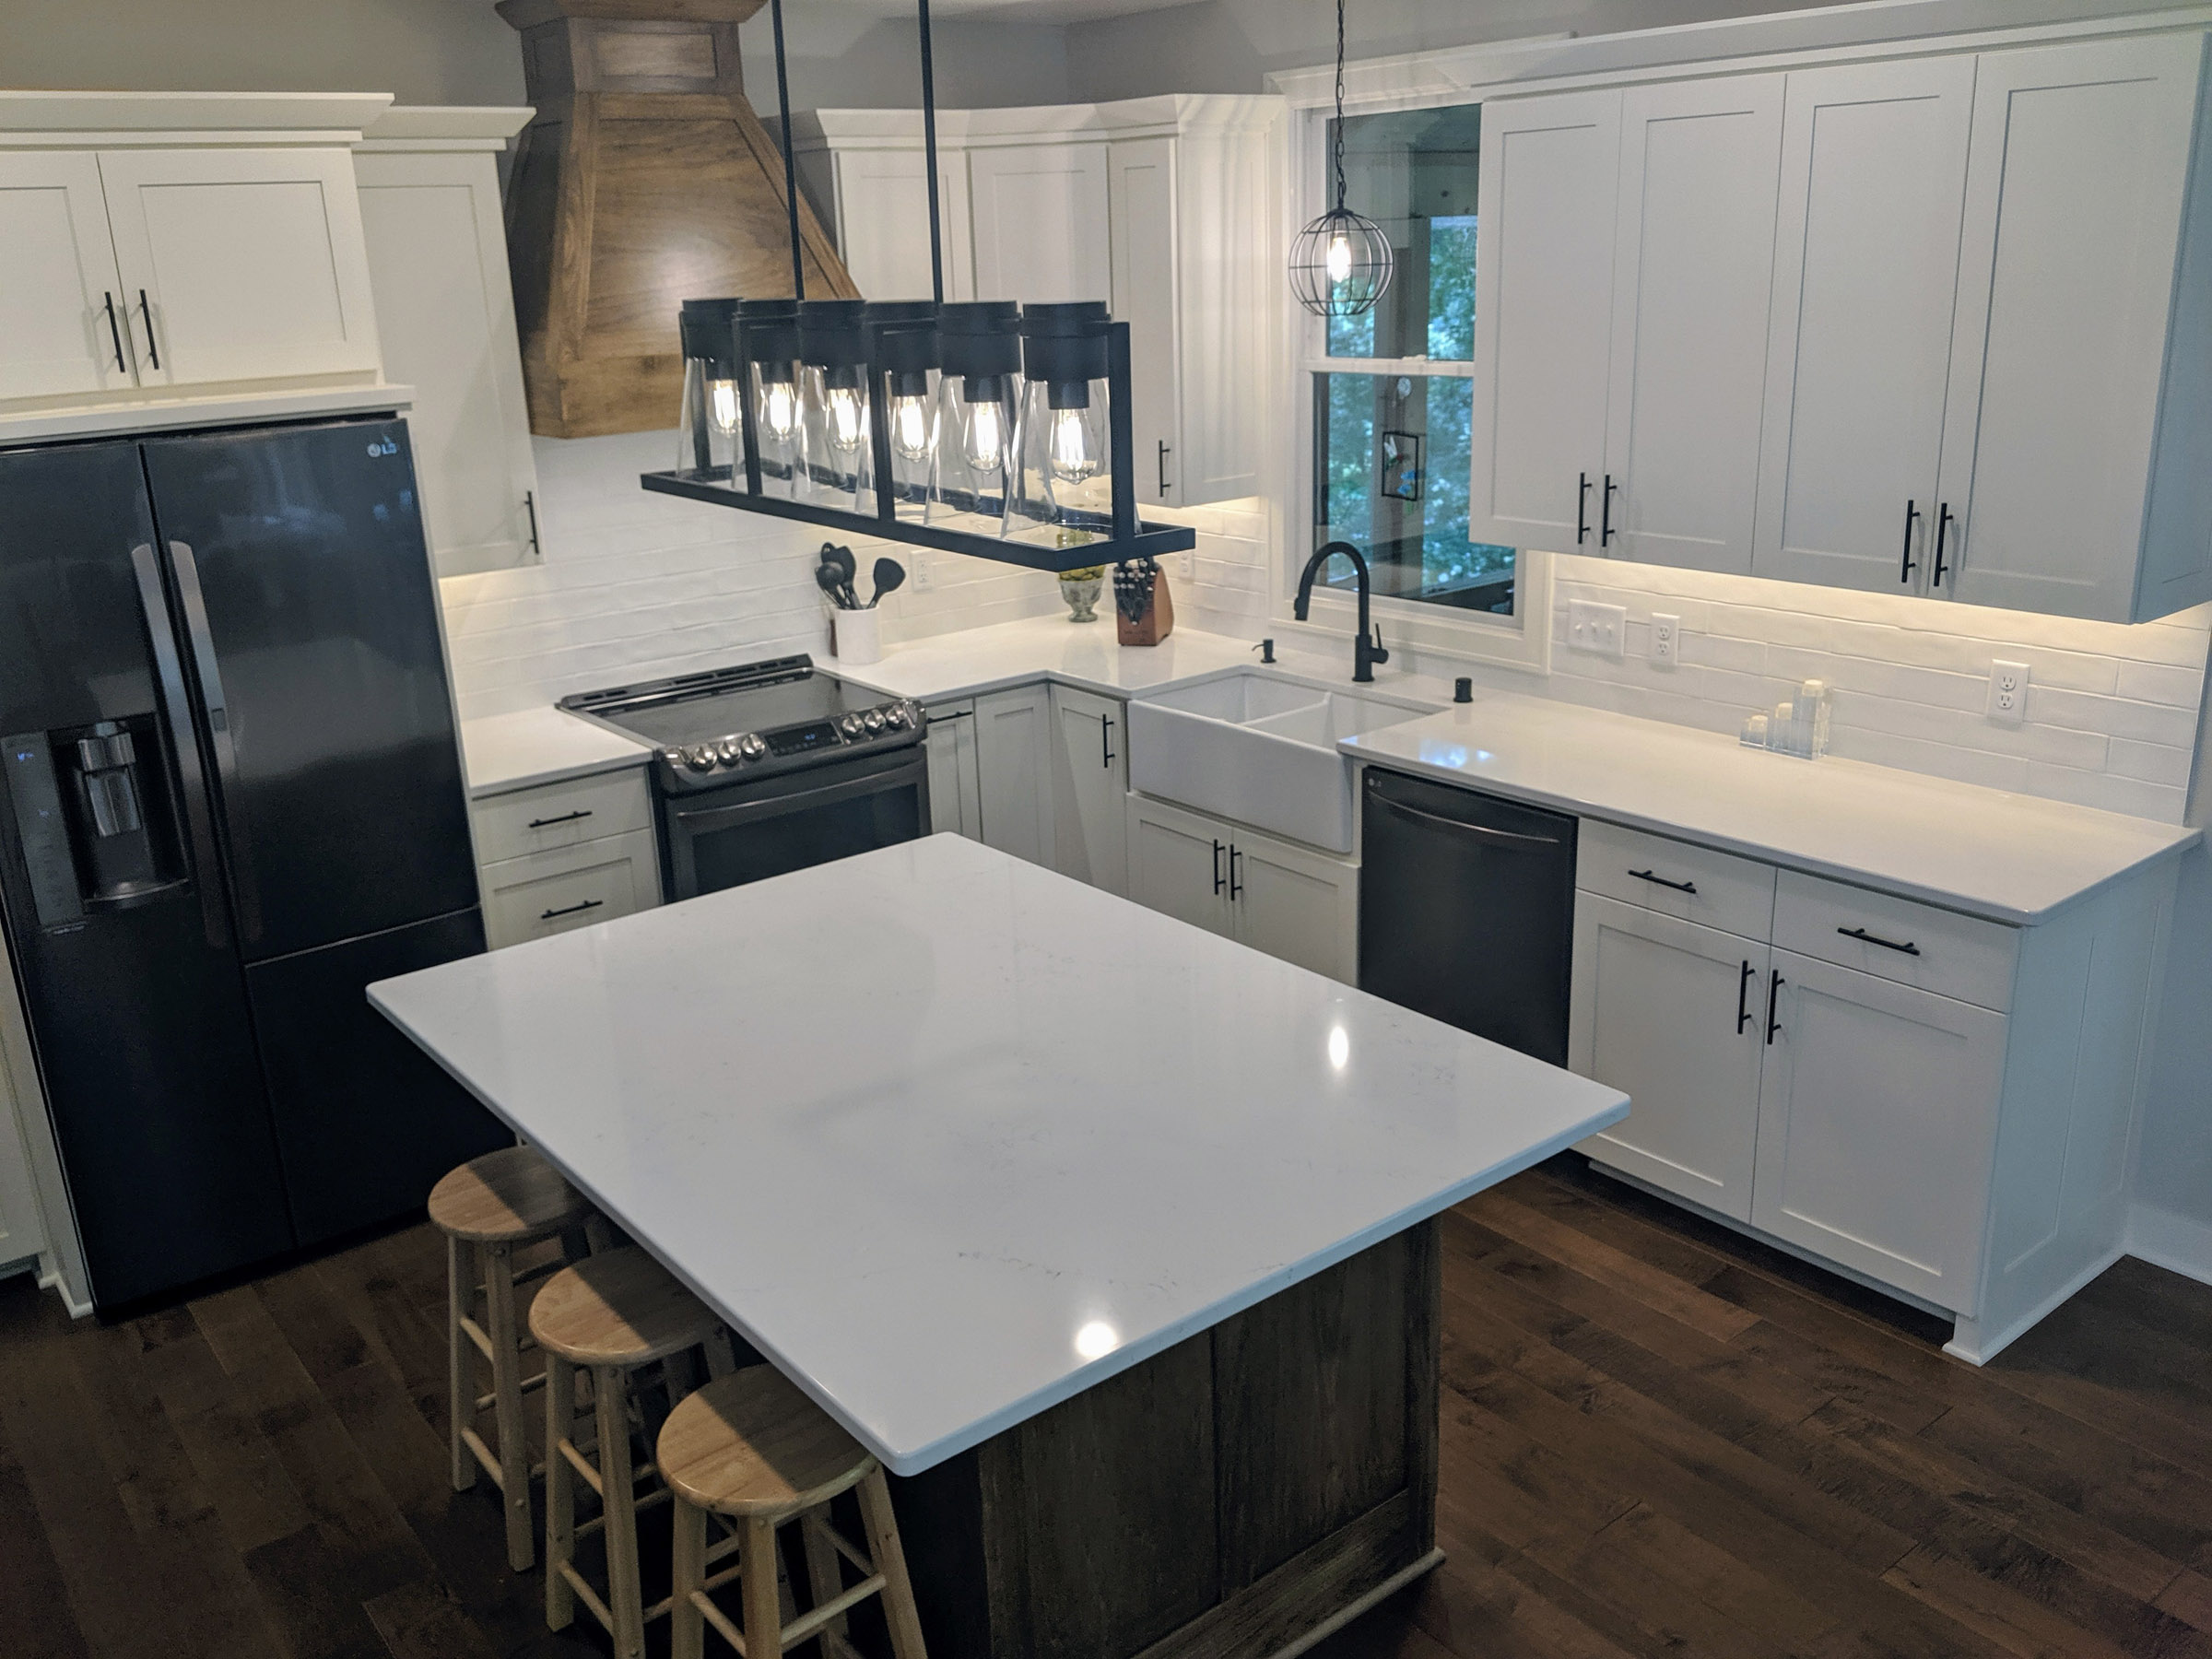 Light & dark colors compliment the kitchen design